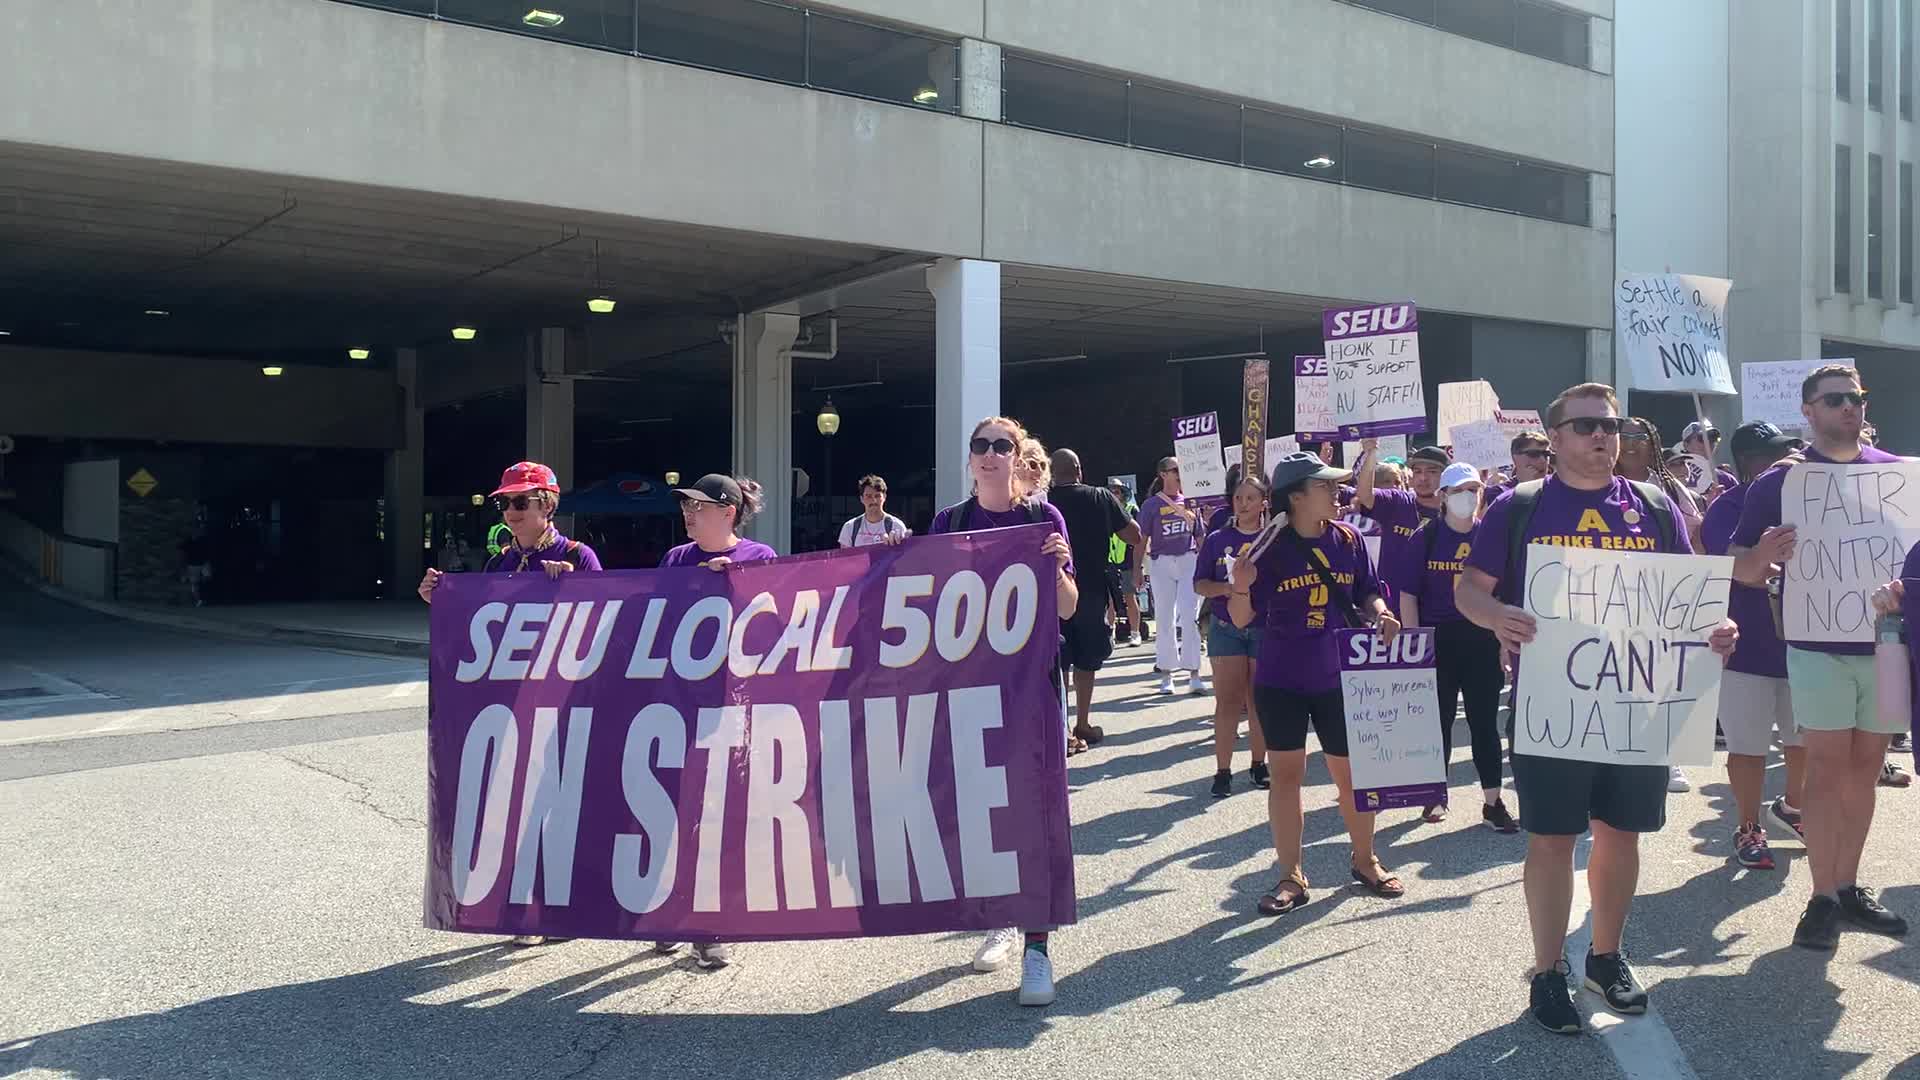 Video of the Strike (41) by Amanda Kleinman